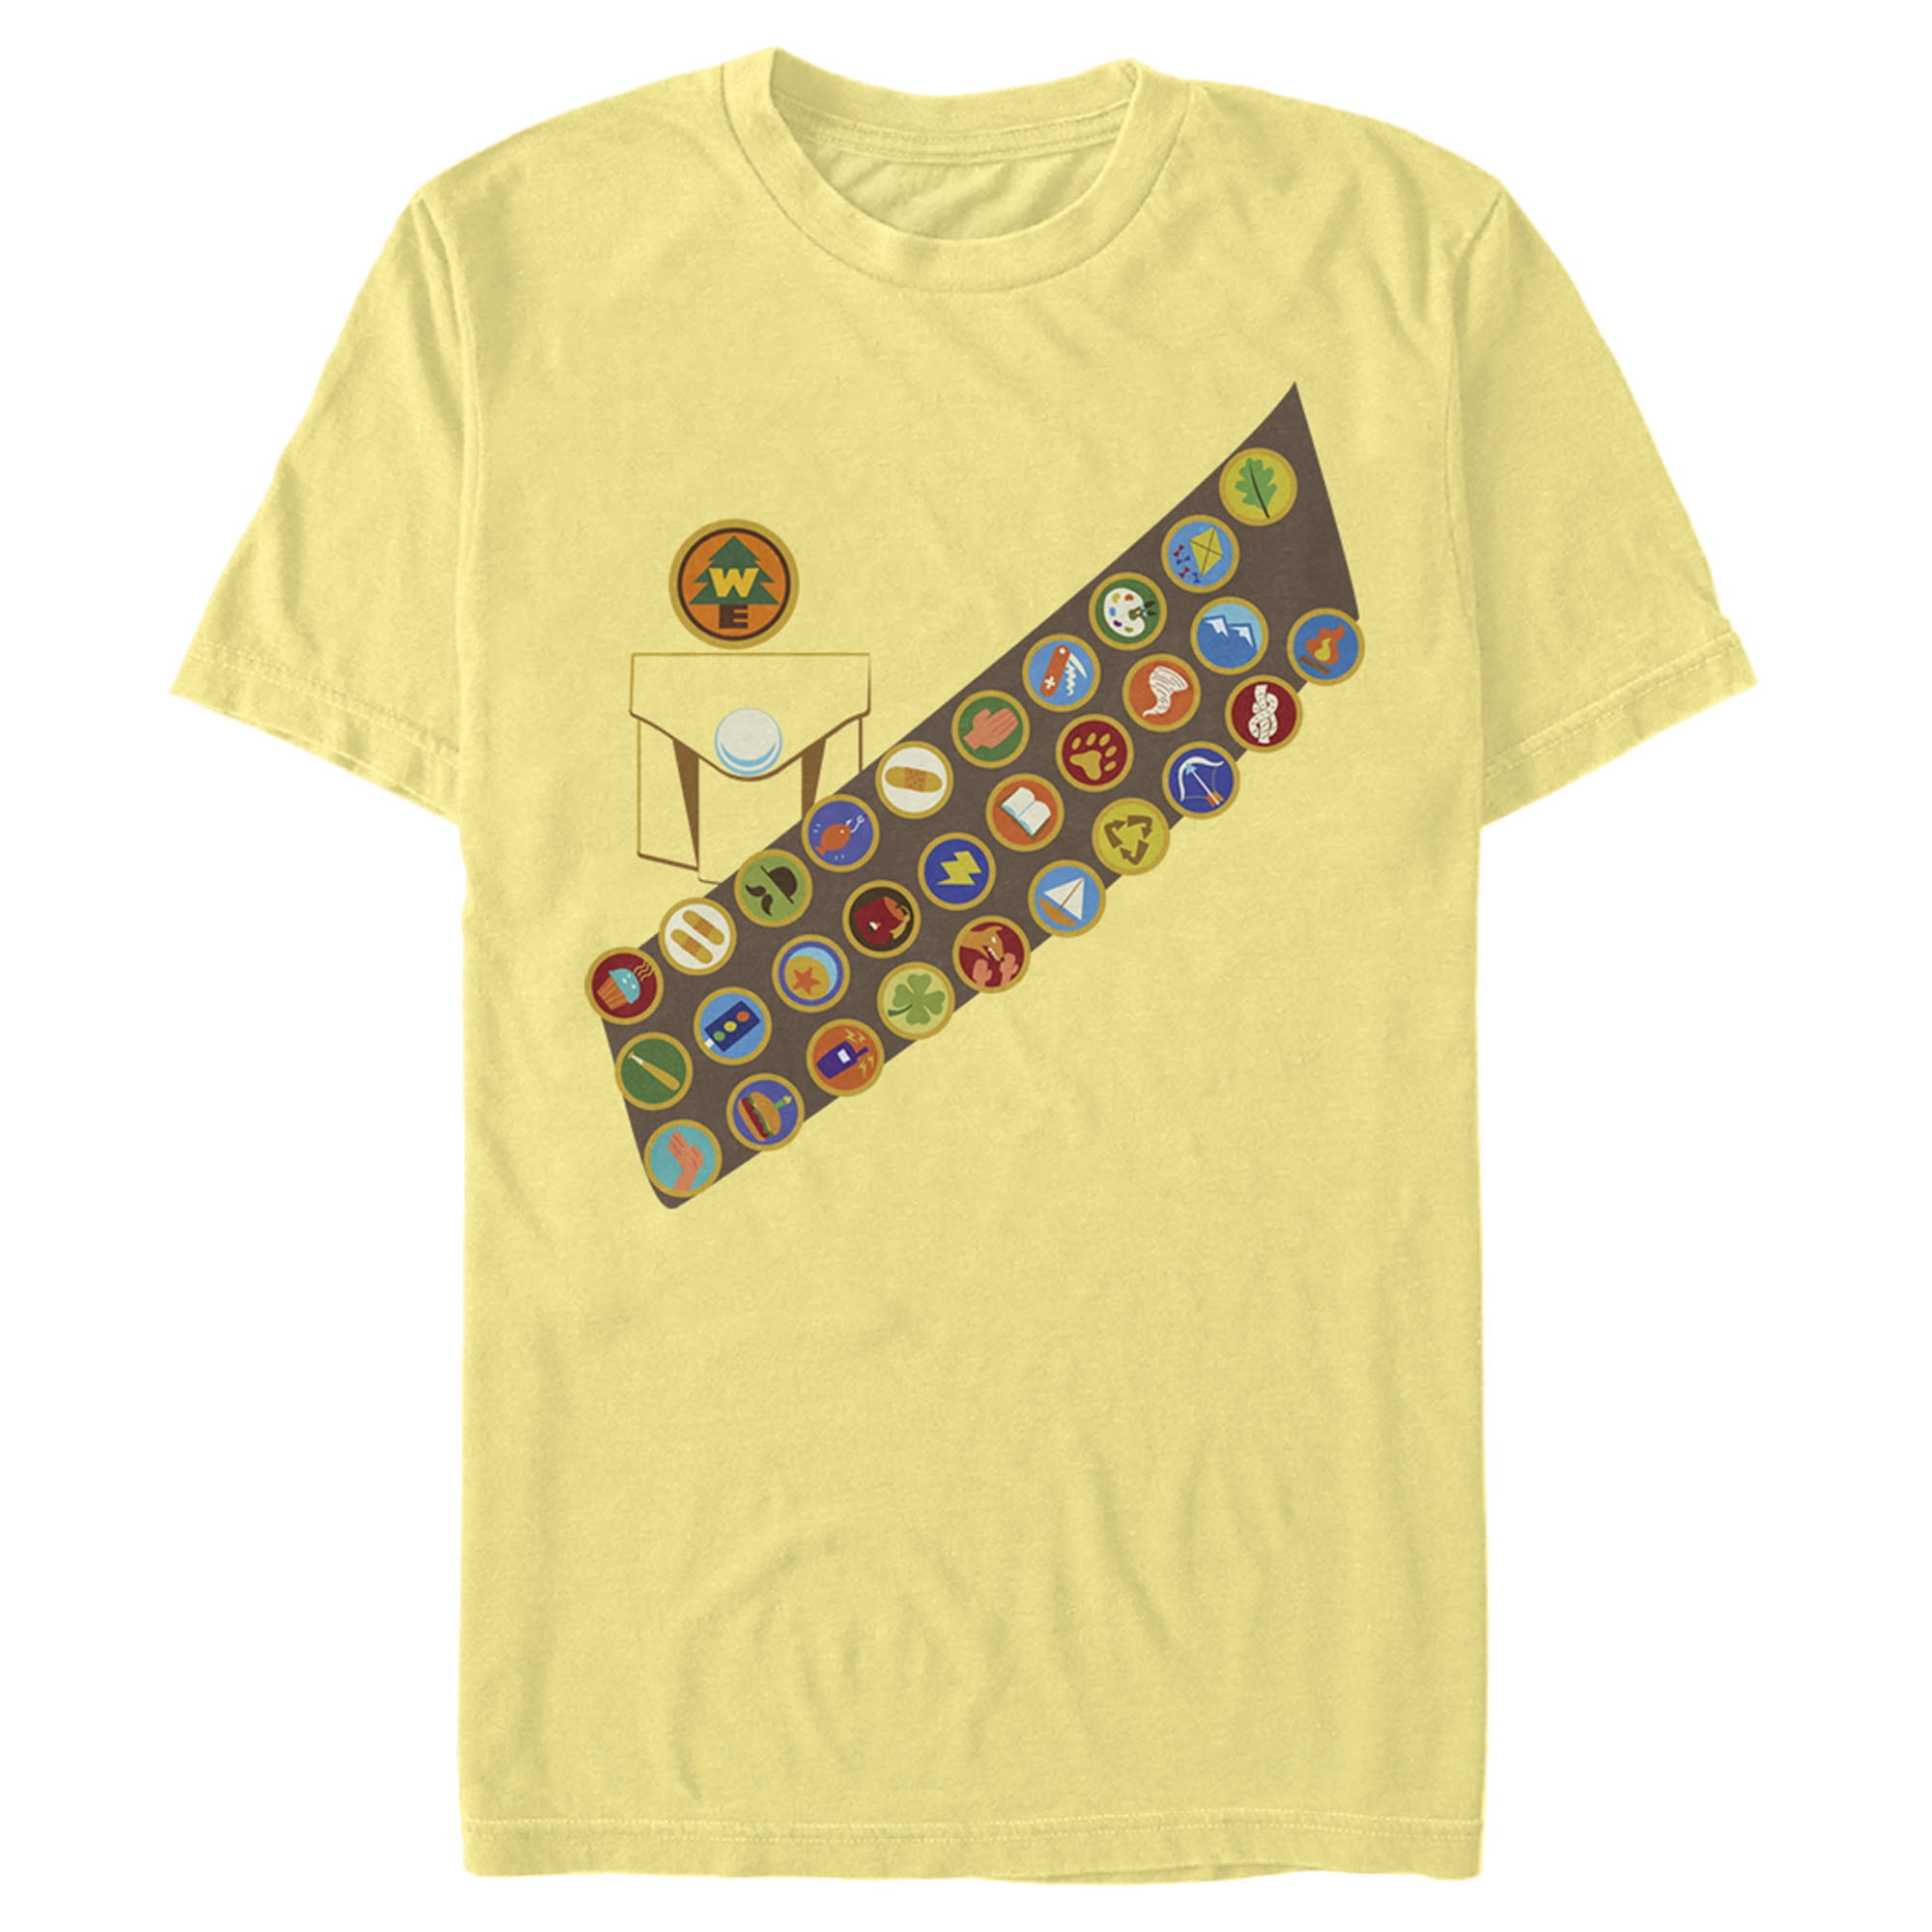 Disney Mens Artemis Fowl Schematic T-Shirt